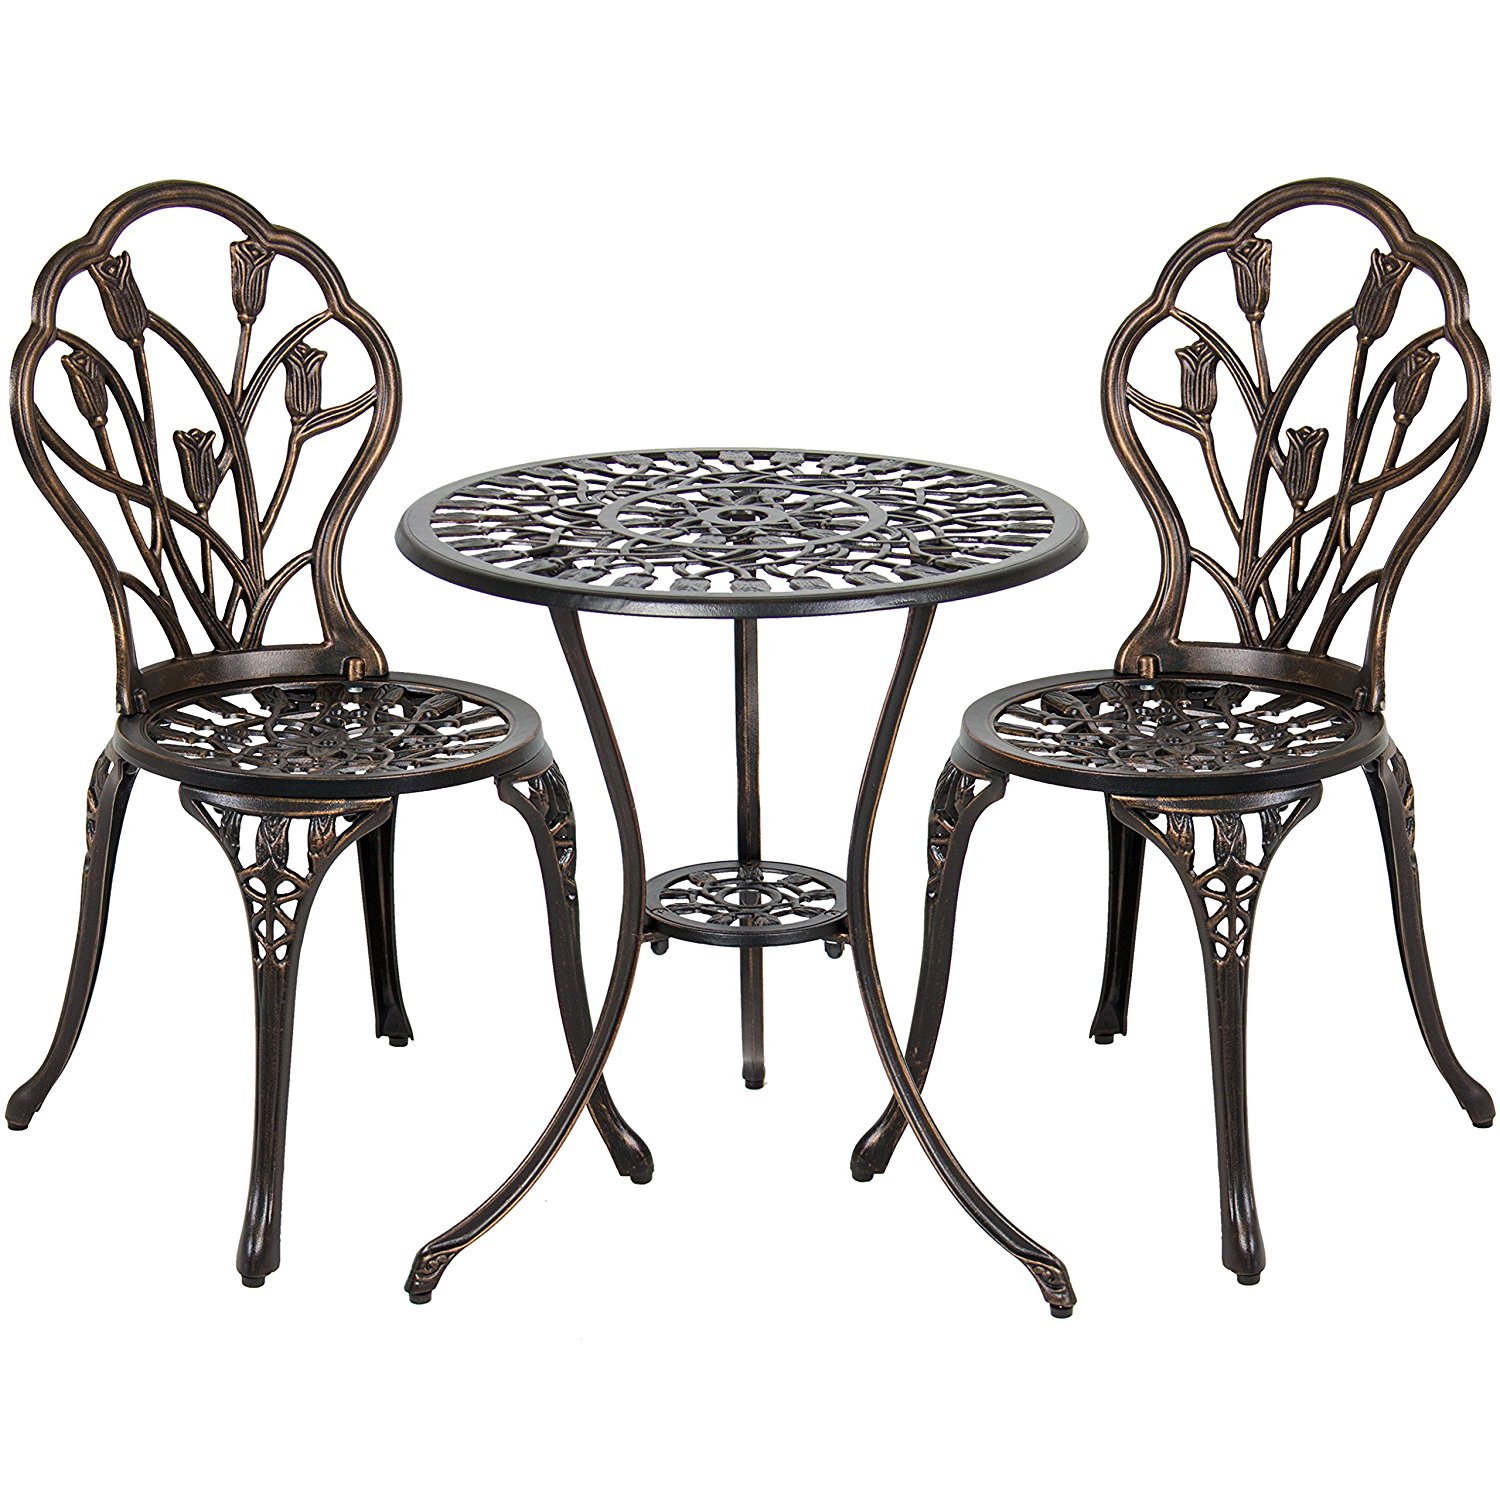 Best Choice Products Outdoor Patio Furniture Tulip Design Cast Aluminum 3 Piece Bistro Set in Antique Copper